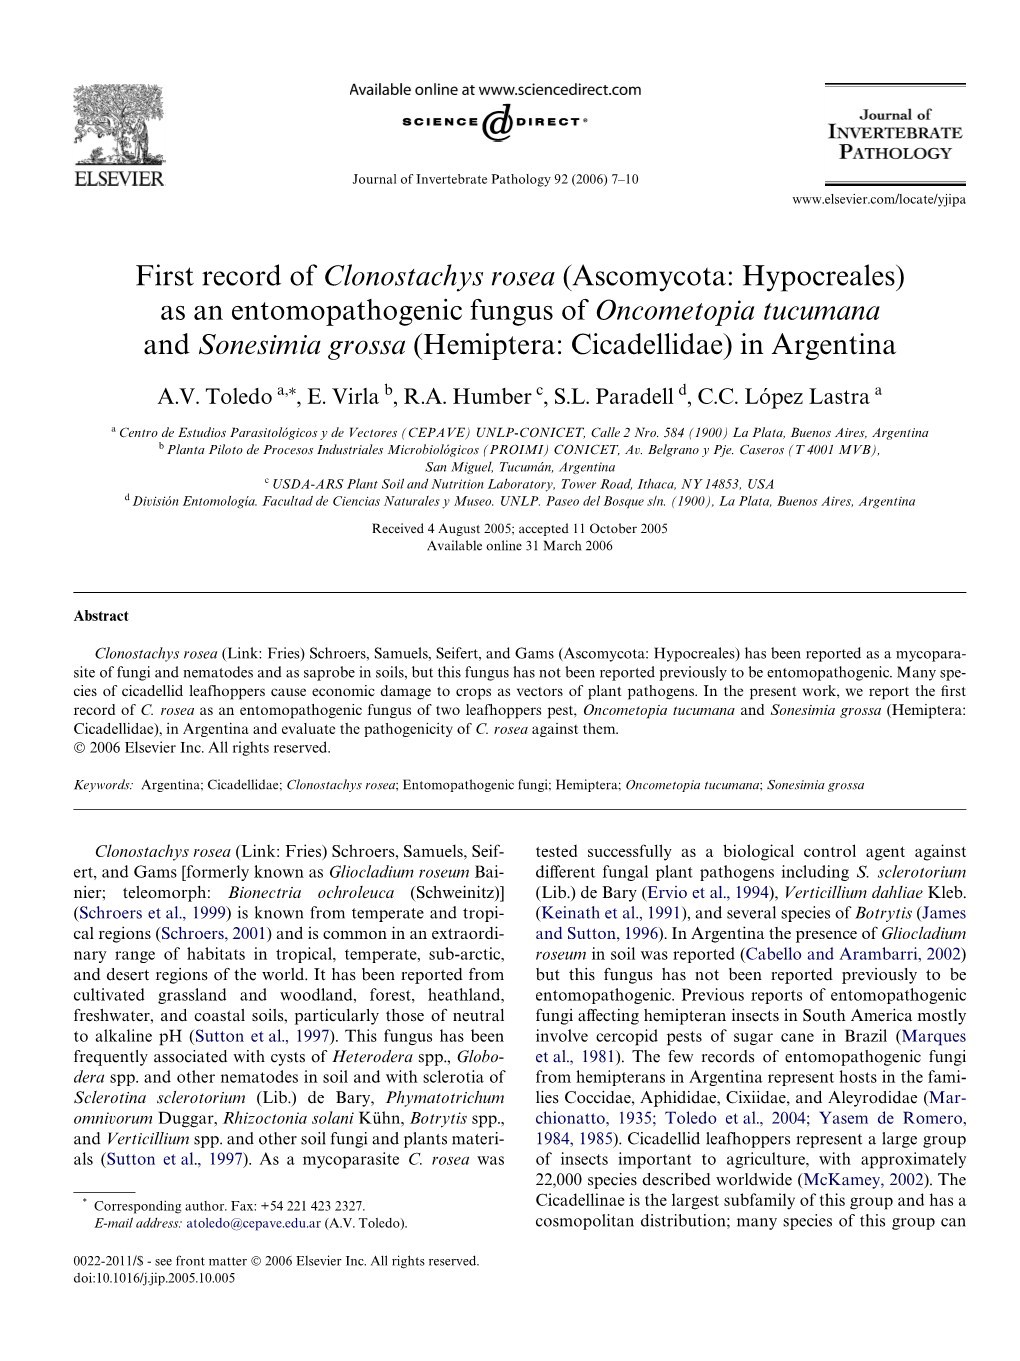 First Record of Clonostachys Rosea (Ascomycota: Hypocreales) As An